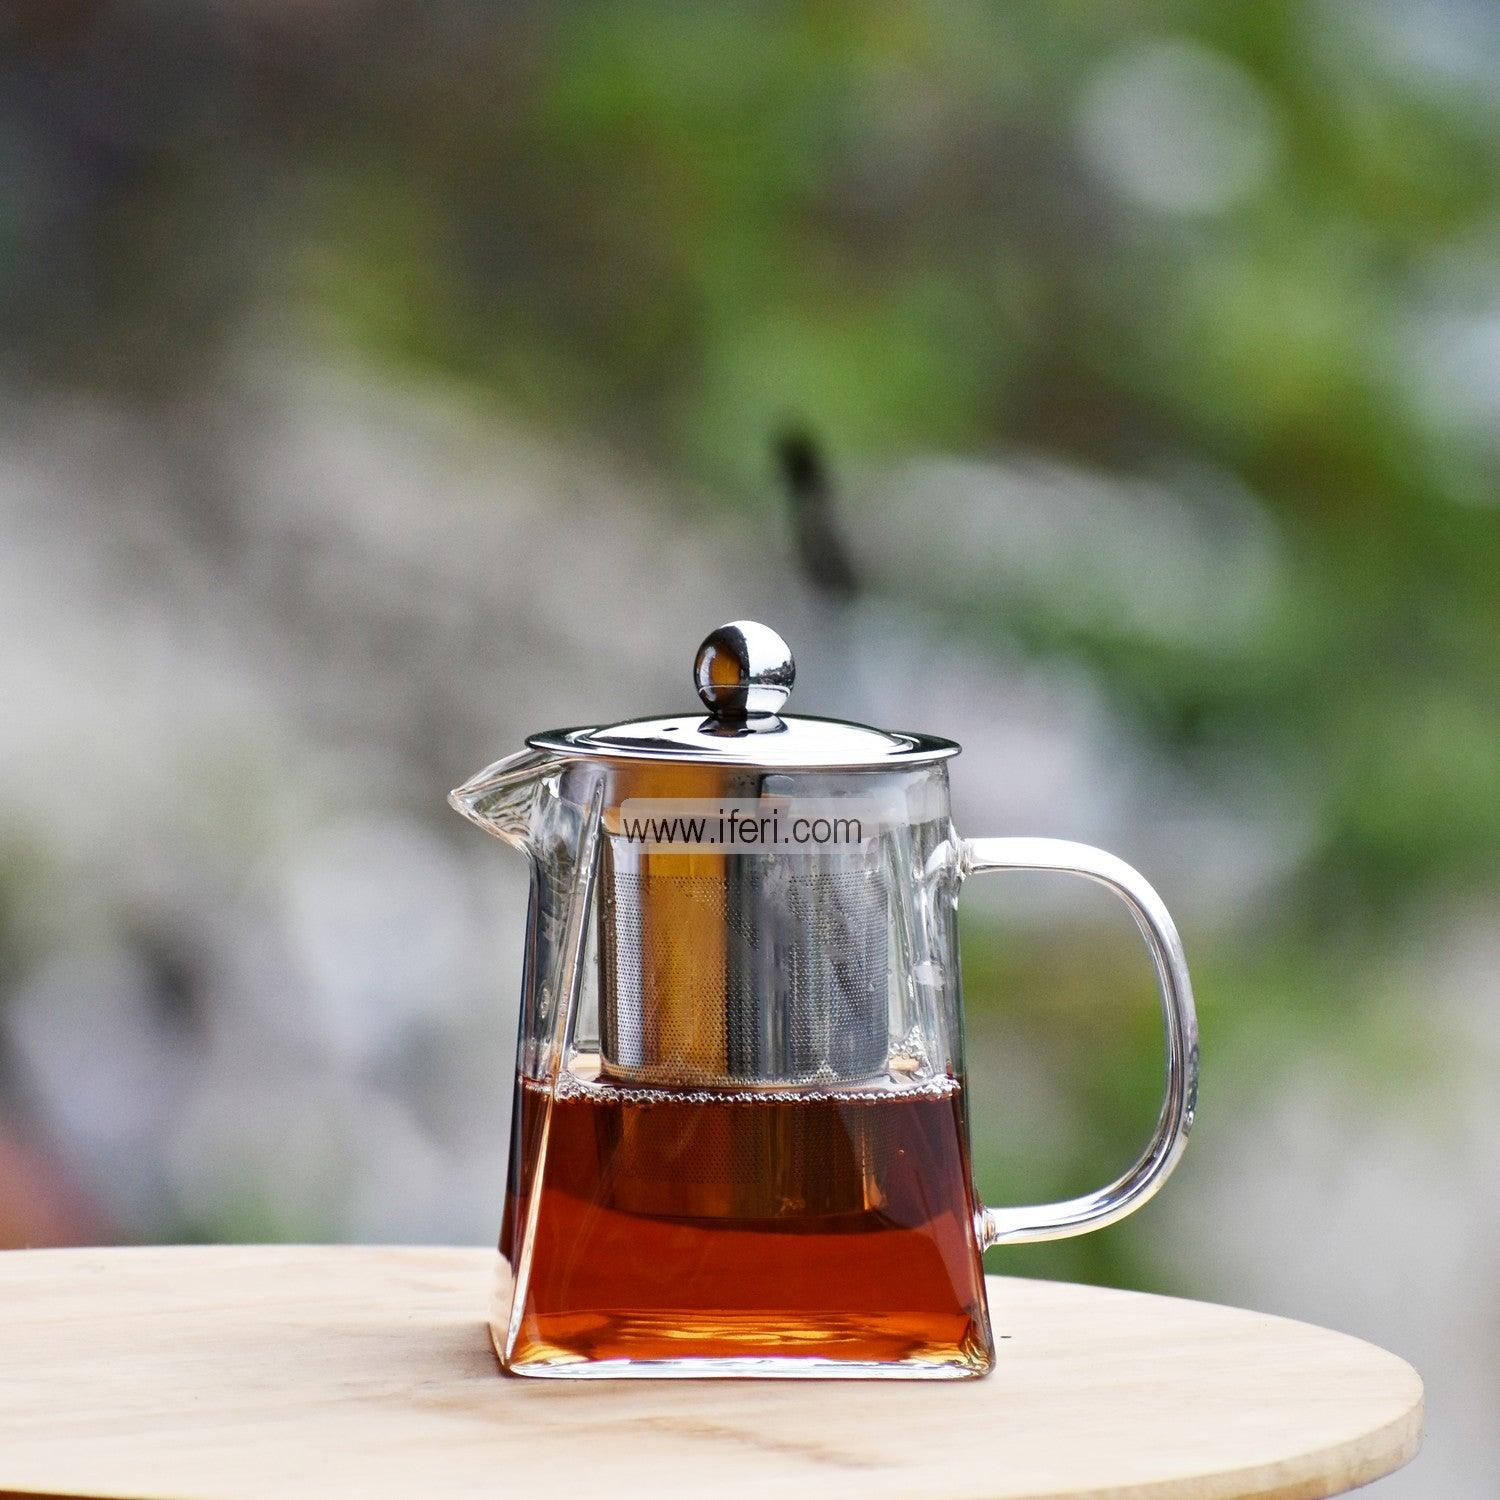 4 Inch Tempered Glass Tea Pot with Infuser EB6064 Price in Bangladesh - iferi.com